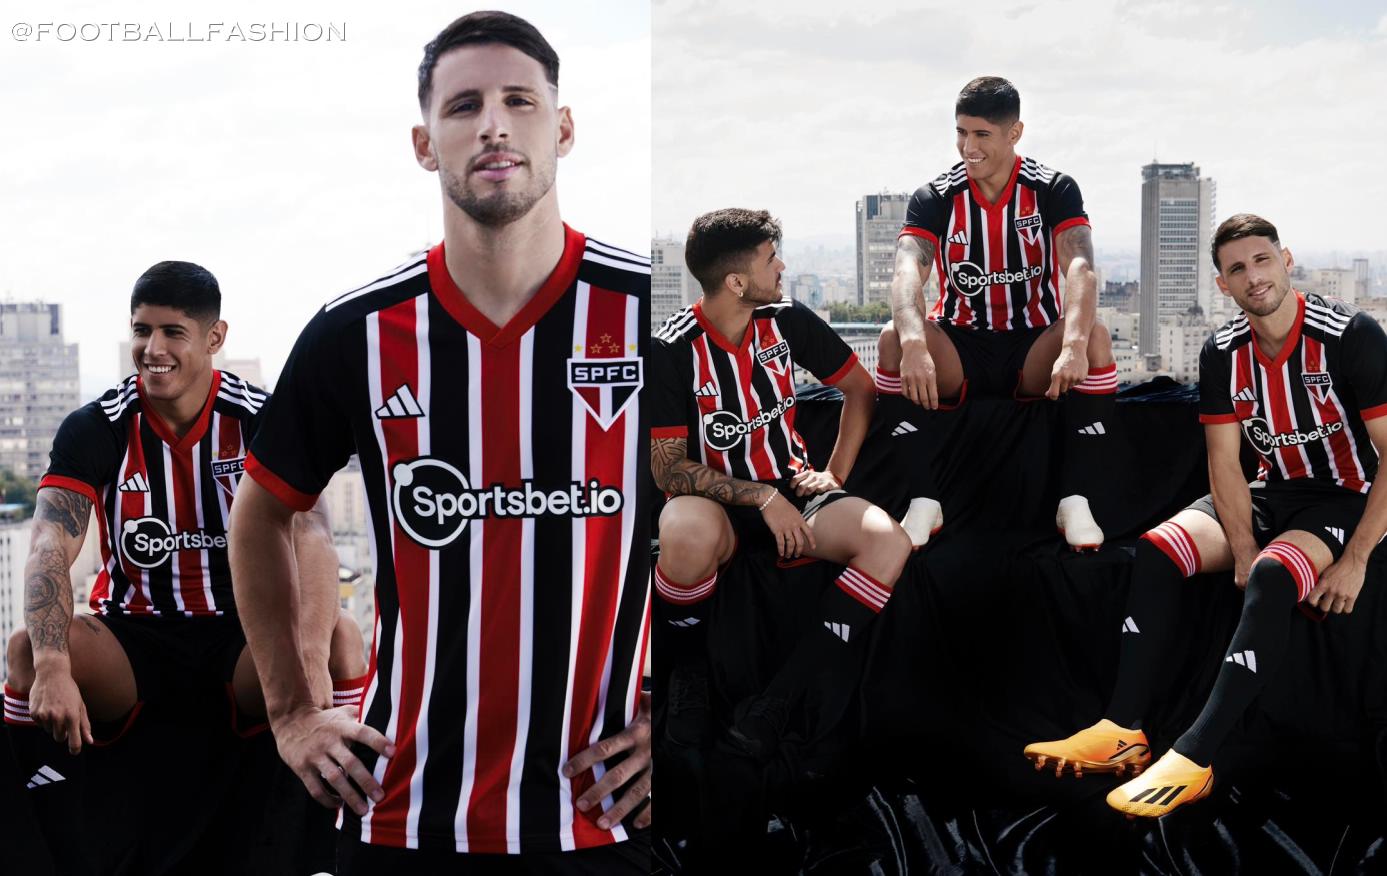 adidas Launch Sao Paulo 2023 Home Shirt - SoccerBible